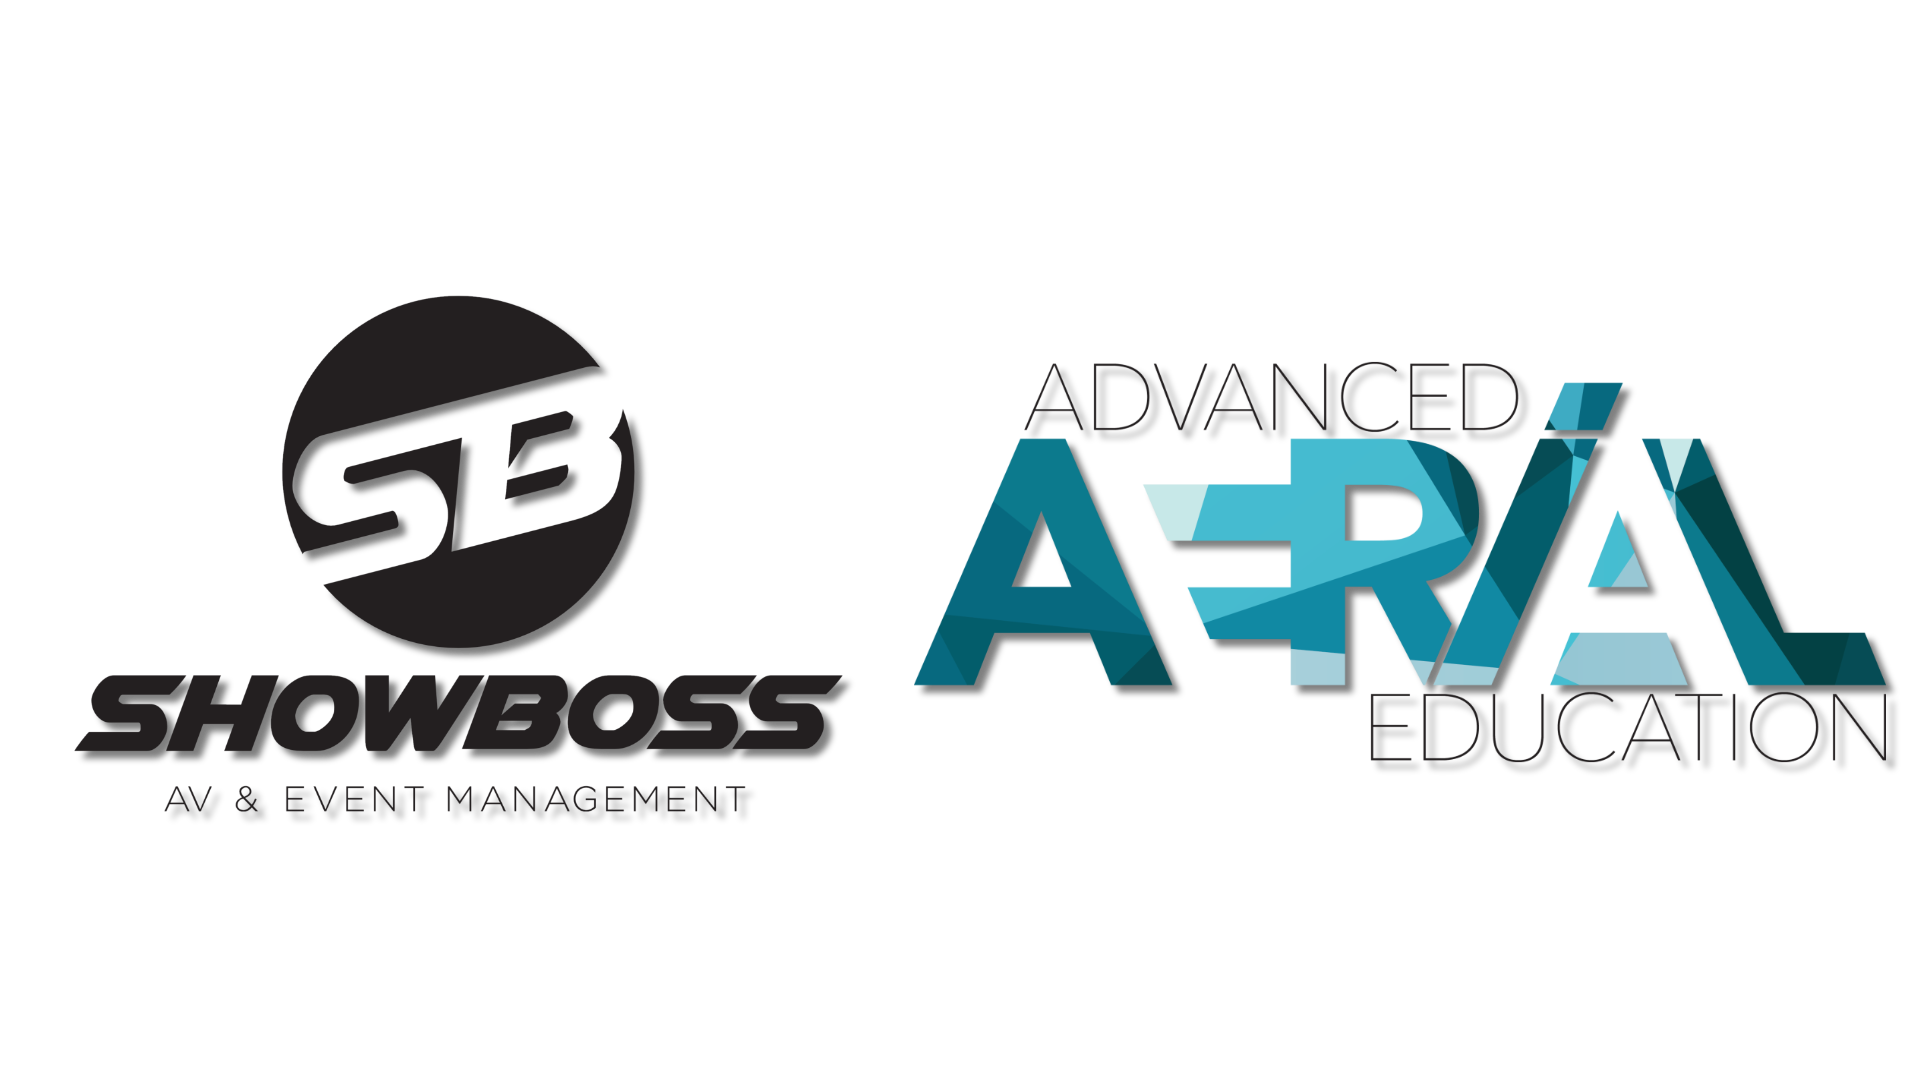 Advanced Aerial Education logo